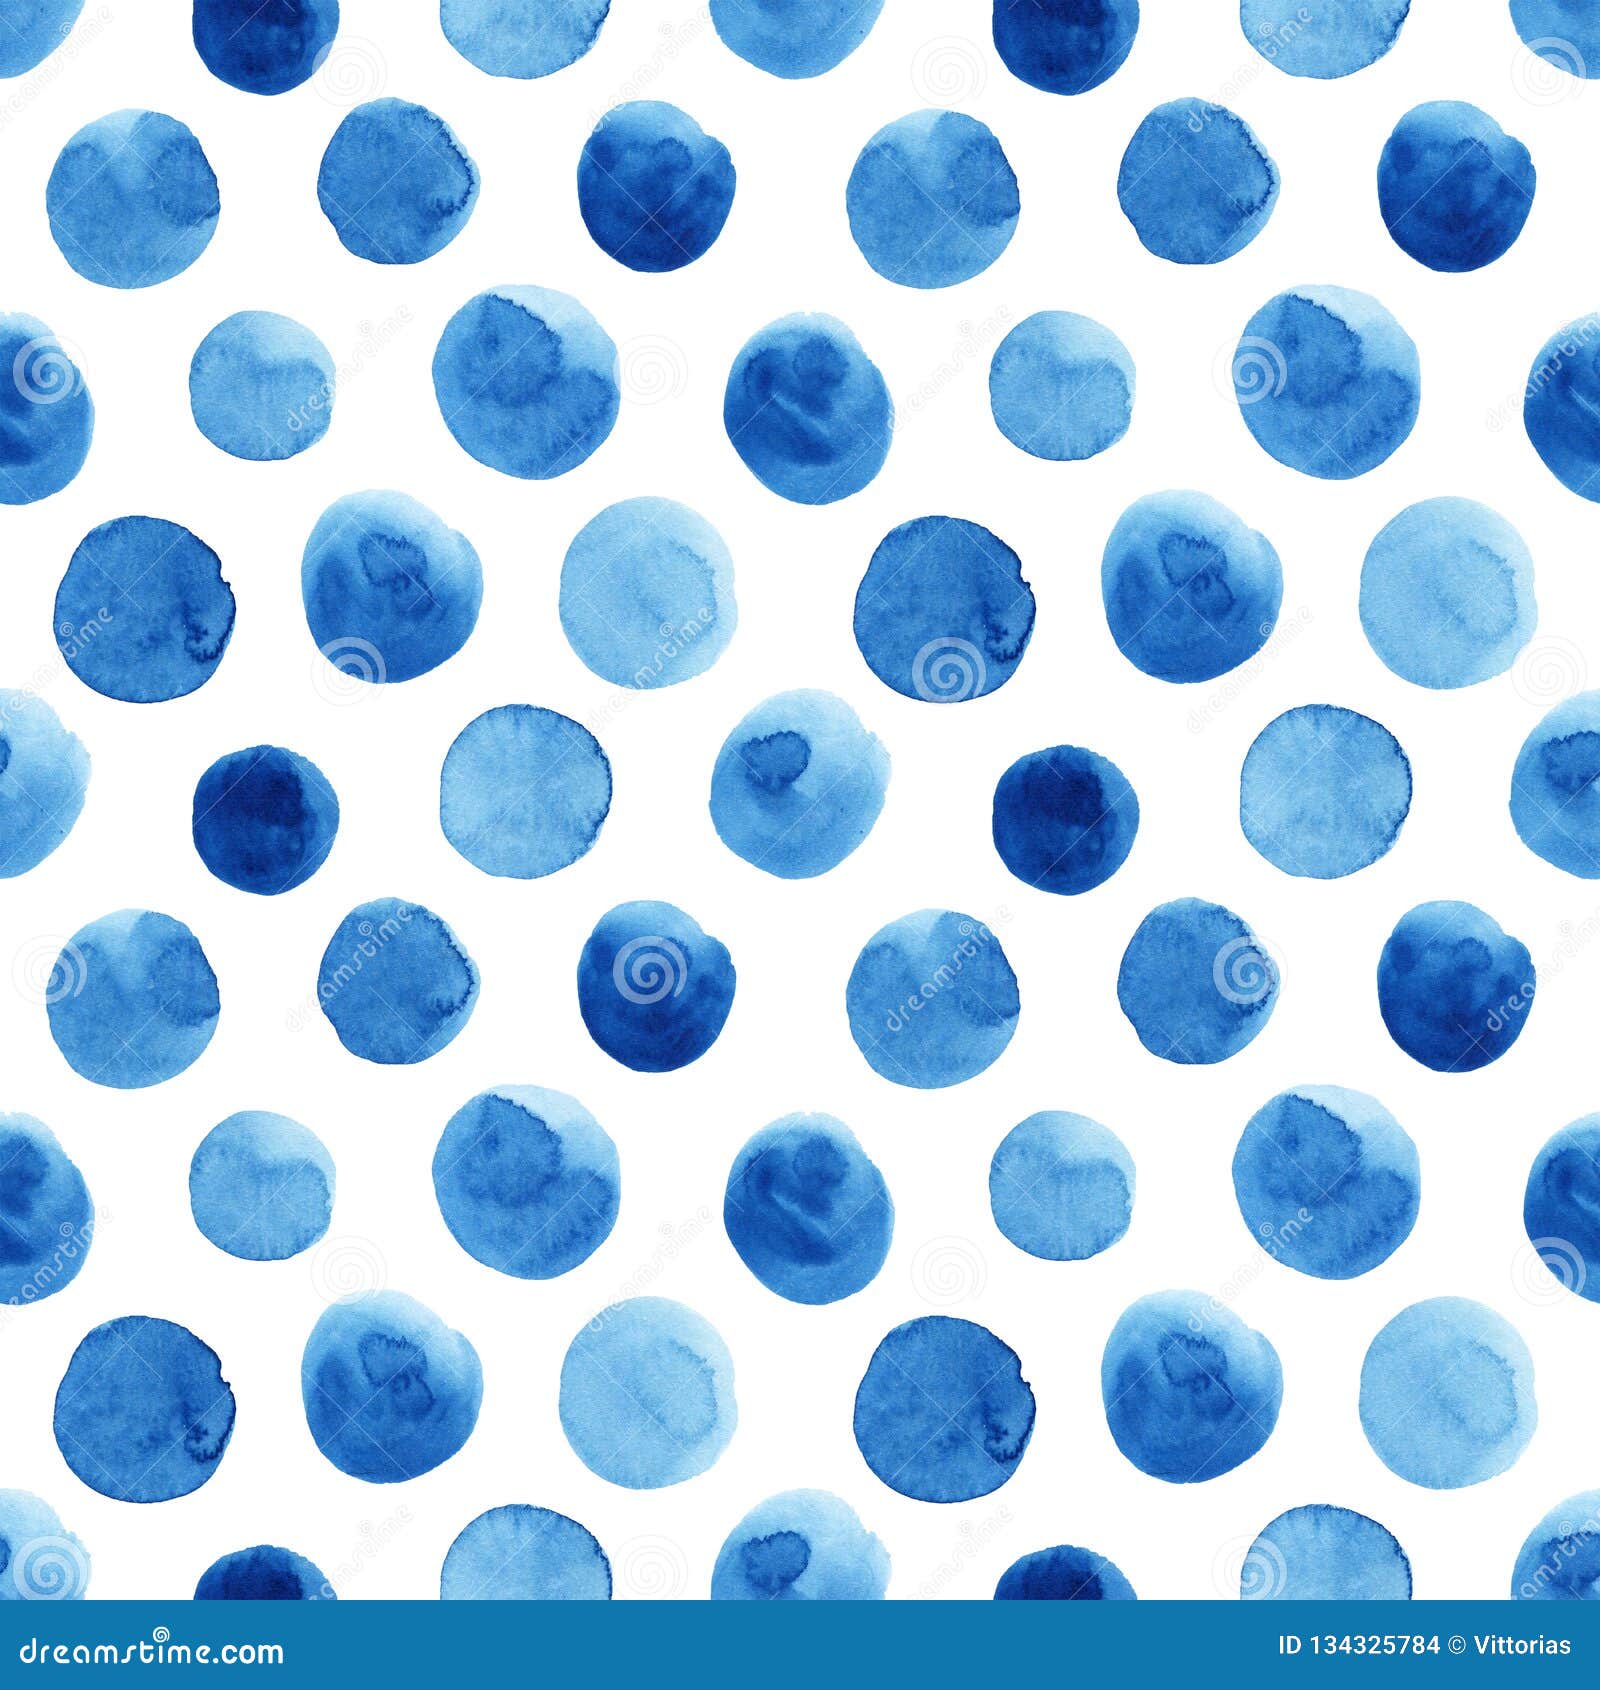 Polka dot pattern iPhone wallpaper  Free Photo  rawpixel